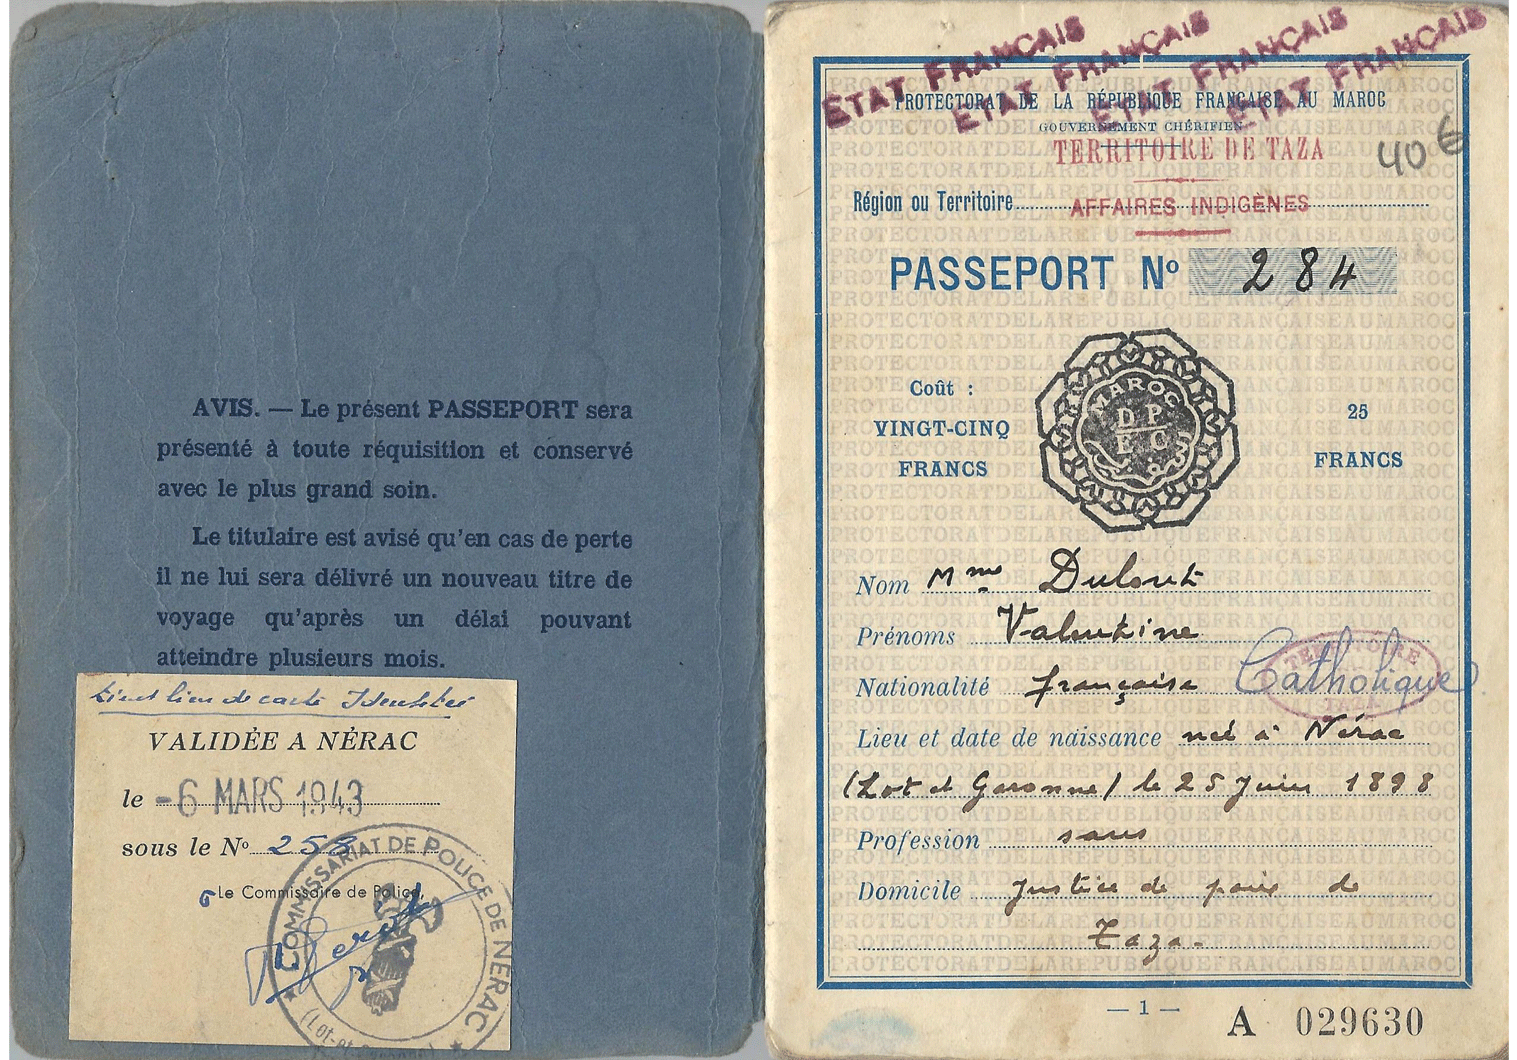 Vichy France passport